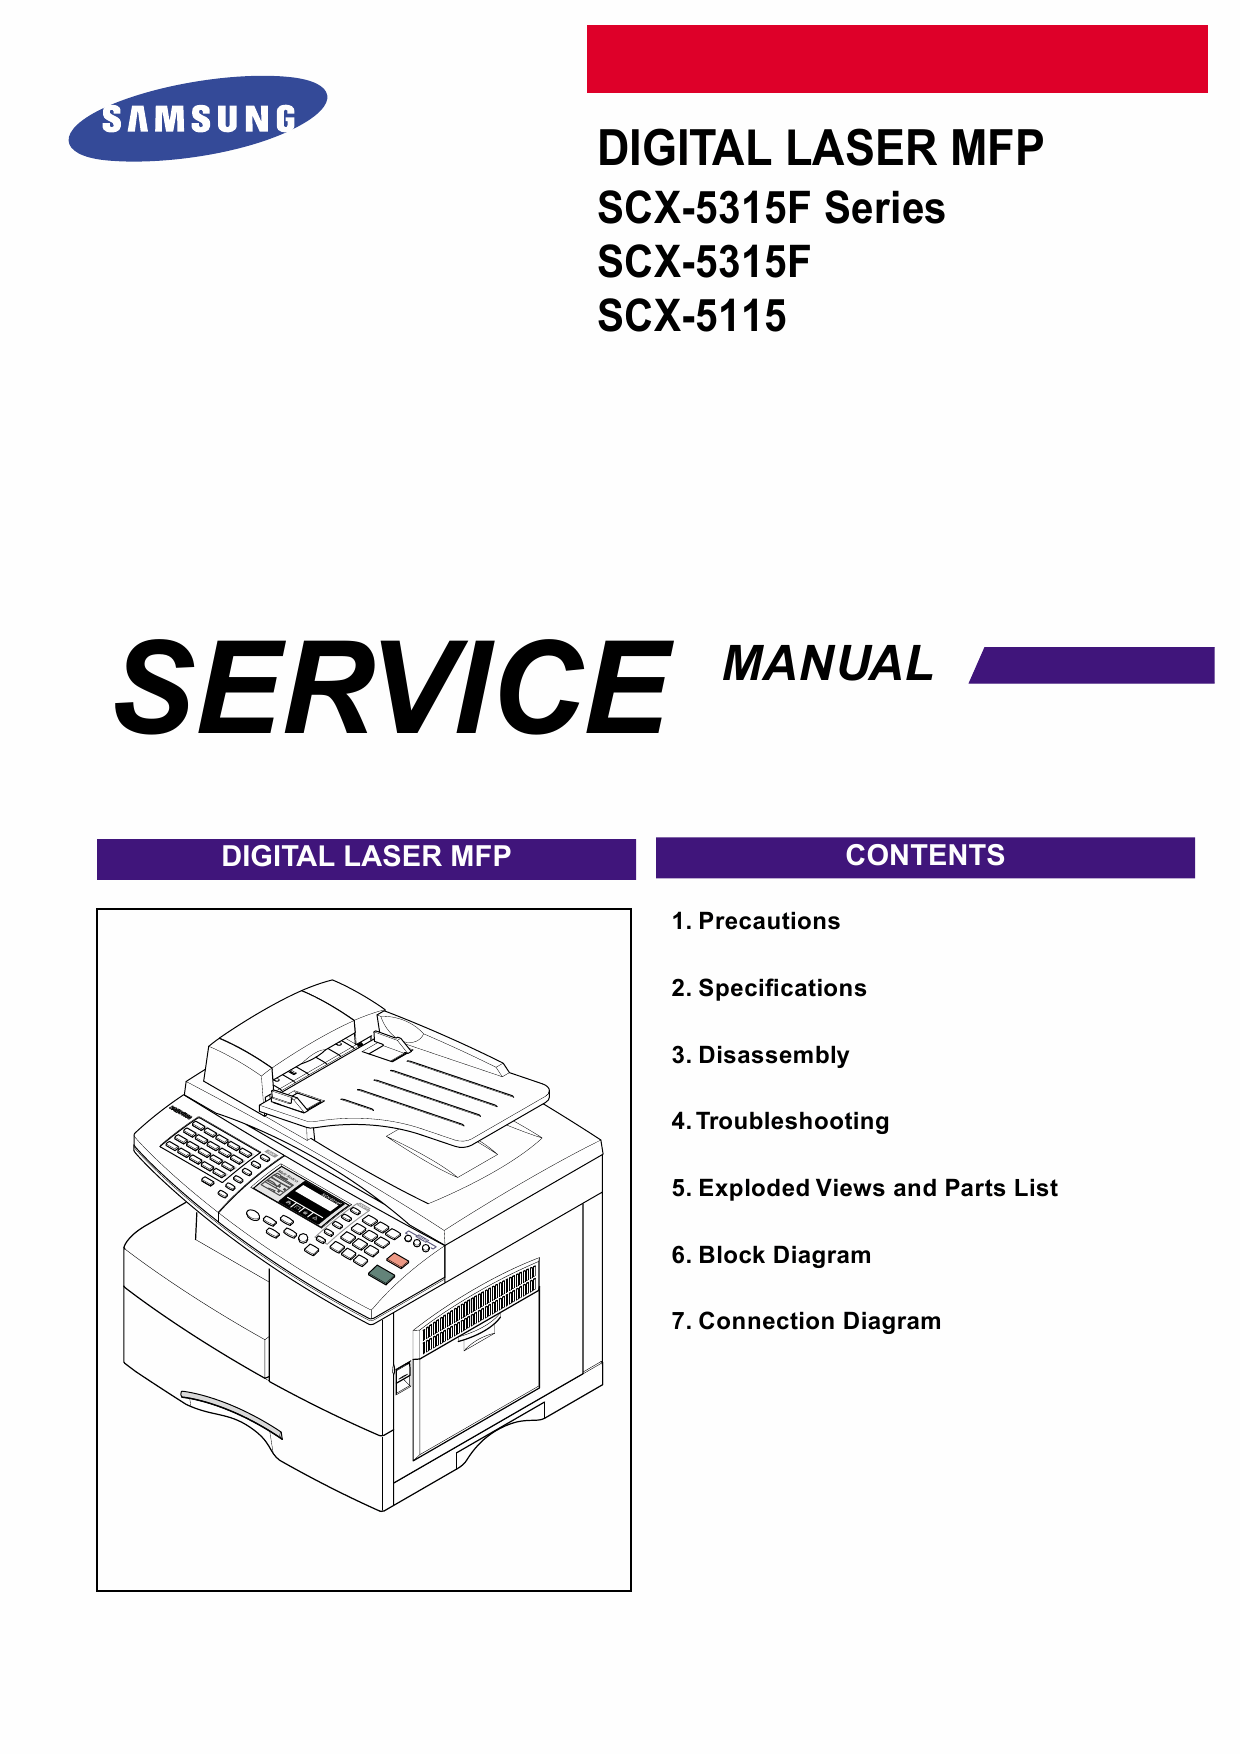 Samsung Digital-Laser-MFP SCX-5315F 5115 Parts and Service Manual-1